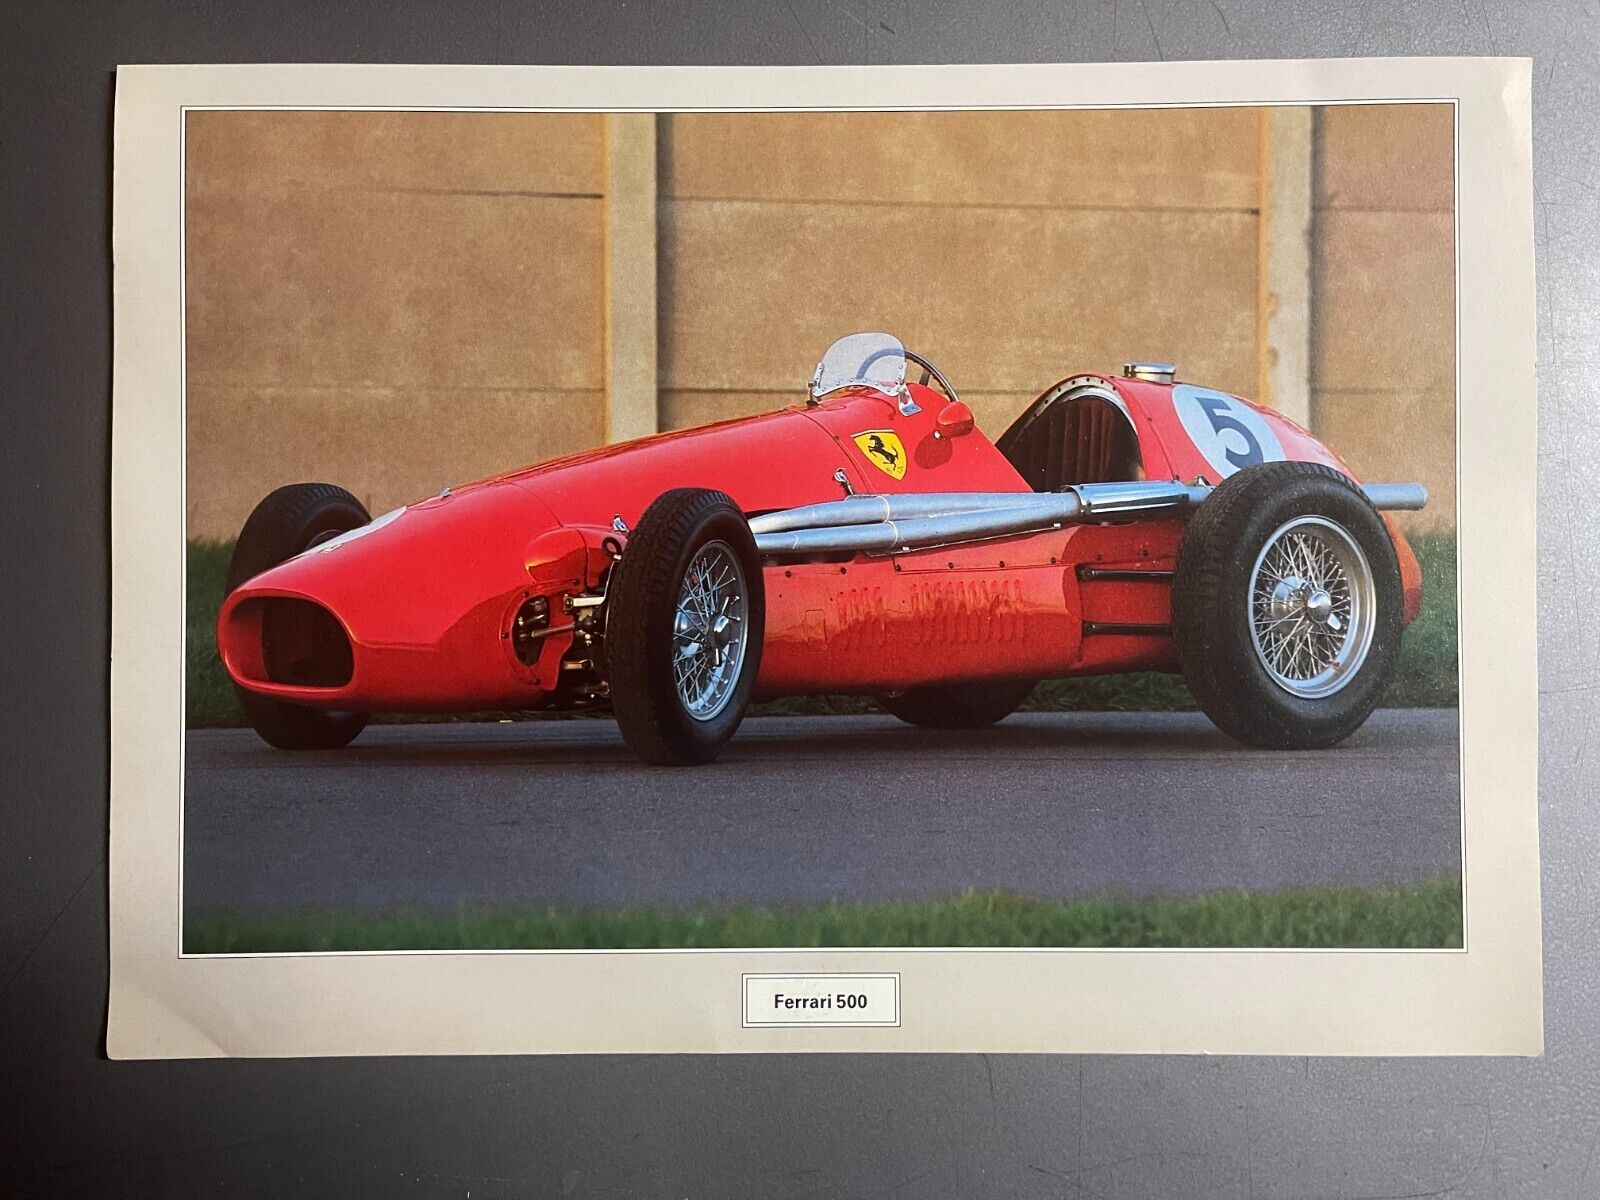 1952 - 1953 Ferrari 500 F2 Race Car Picture / Poster / Print - RARE Awesome